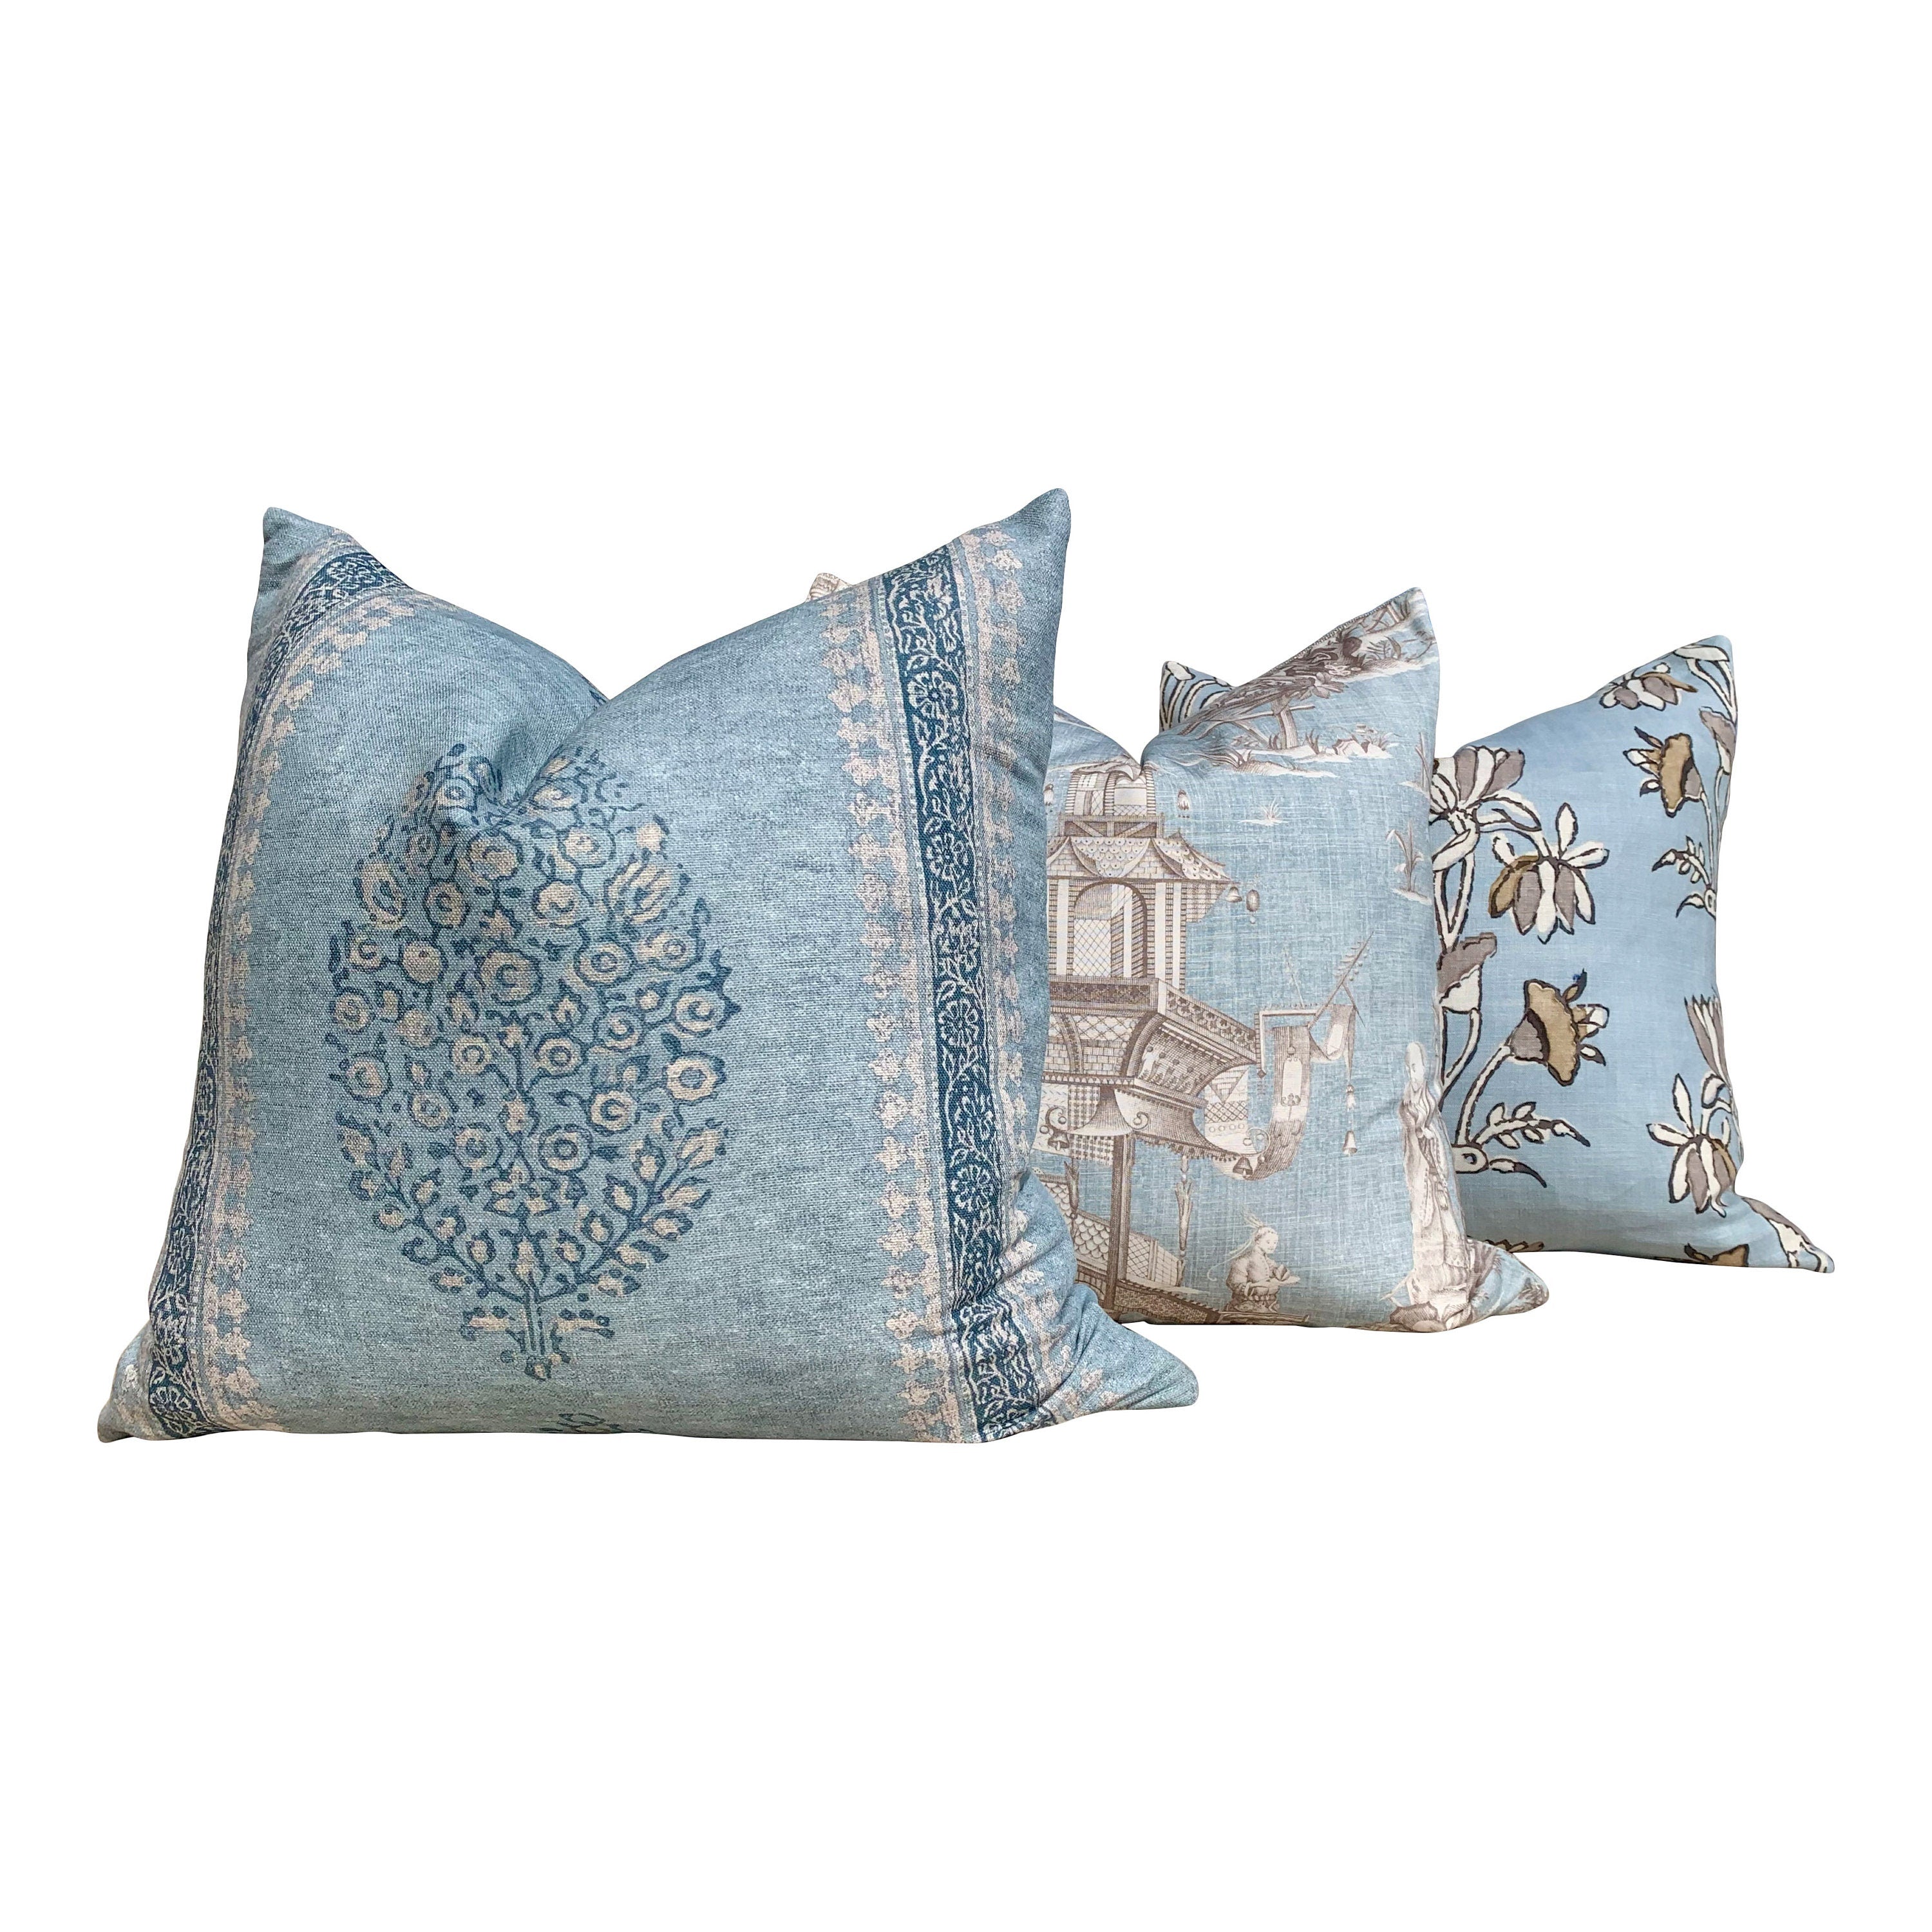 Chappana Medallion Pillow in Antique Blue. Medallion Blue pillows // Accent cushion cover //  Decorative pillow // Euro Sham Pillow